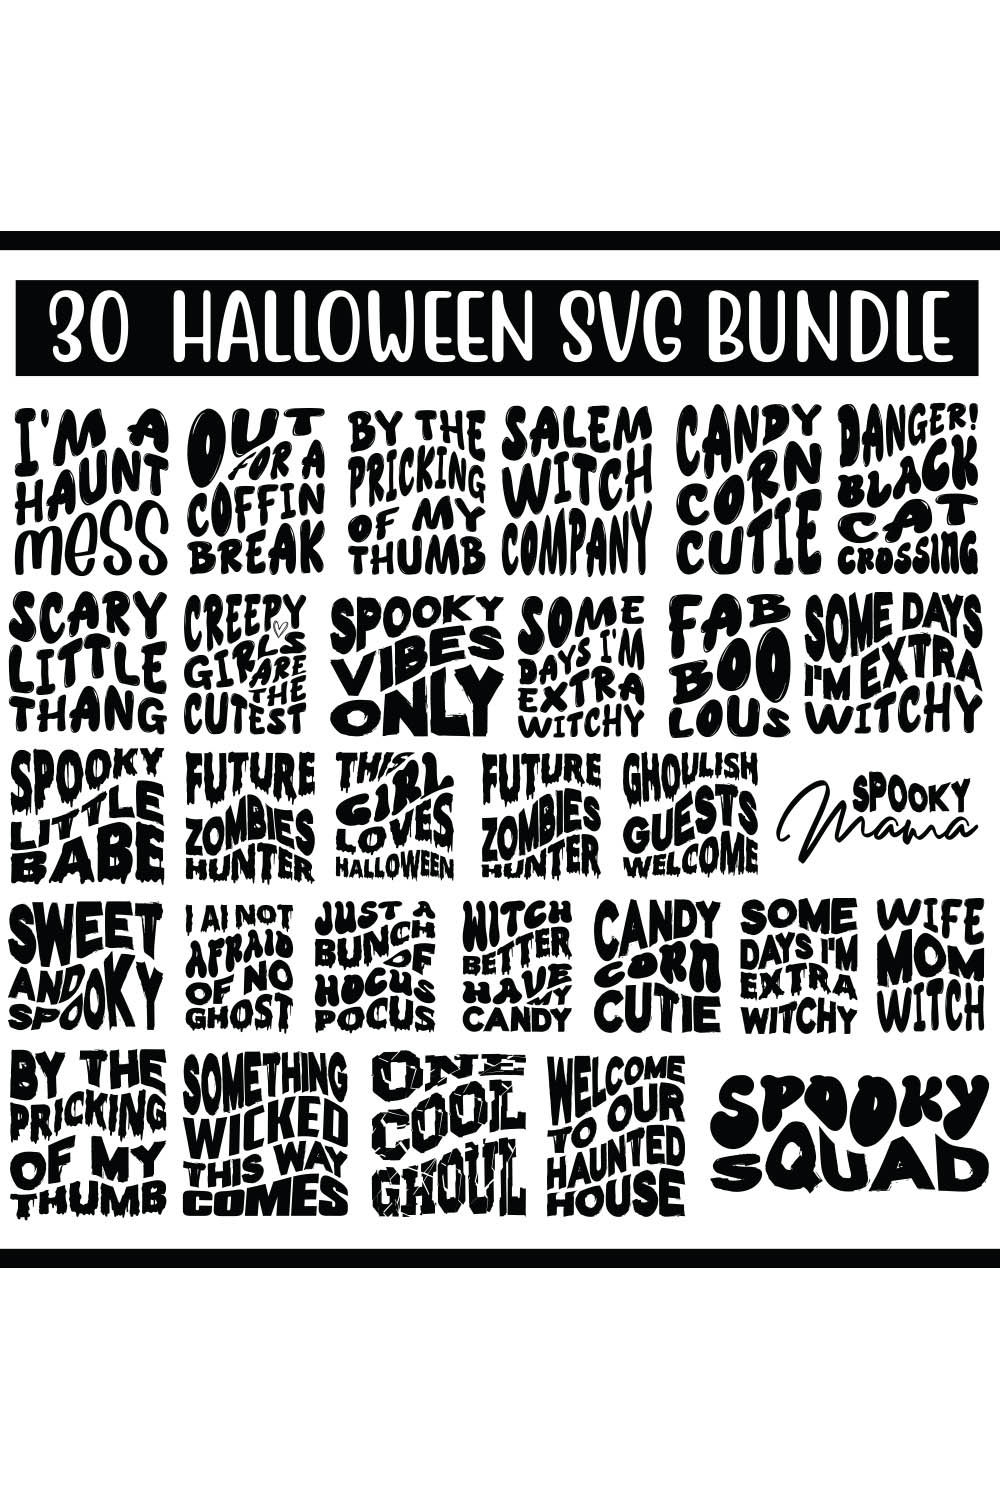 30 SVG Retro Halloween Bundle, Retro SVG Graphic pinterest preview image.